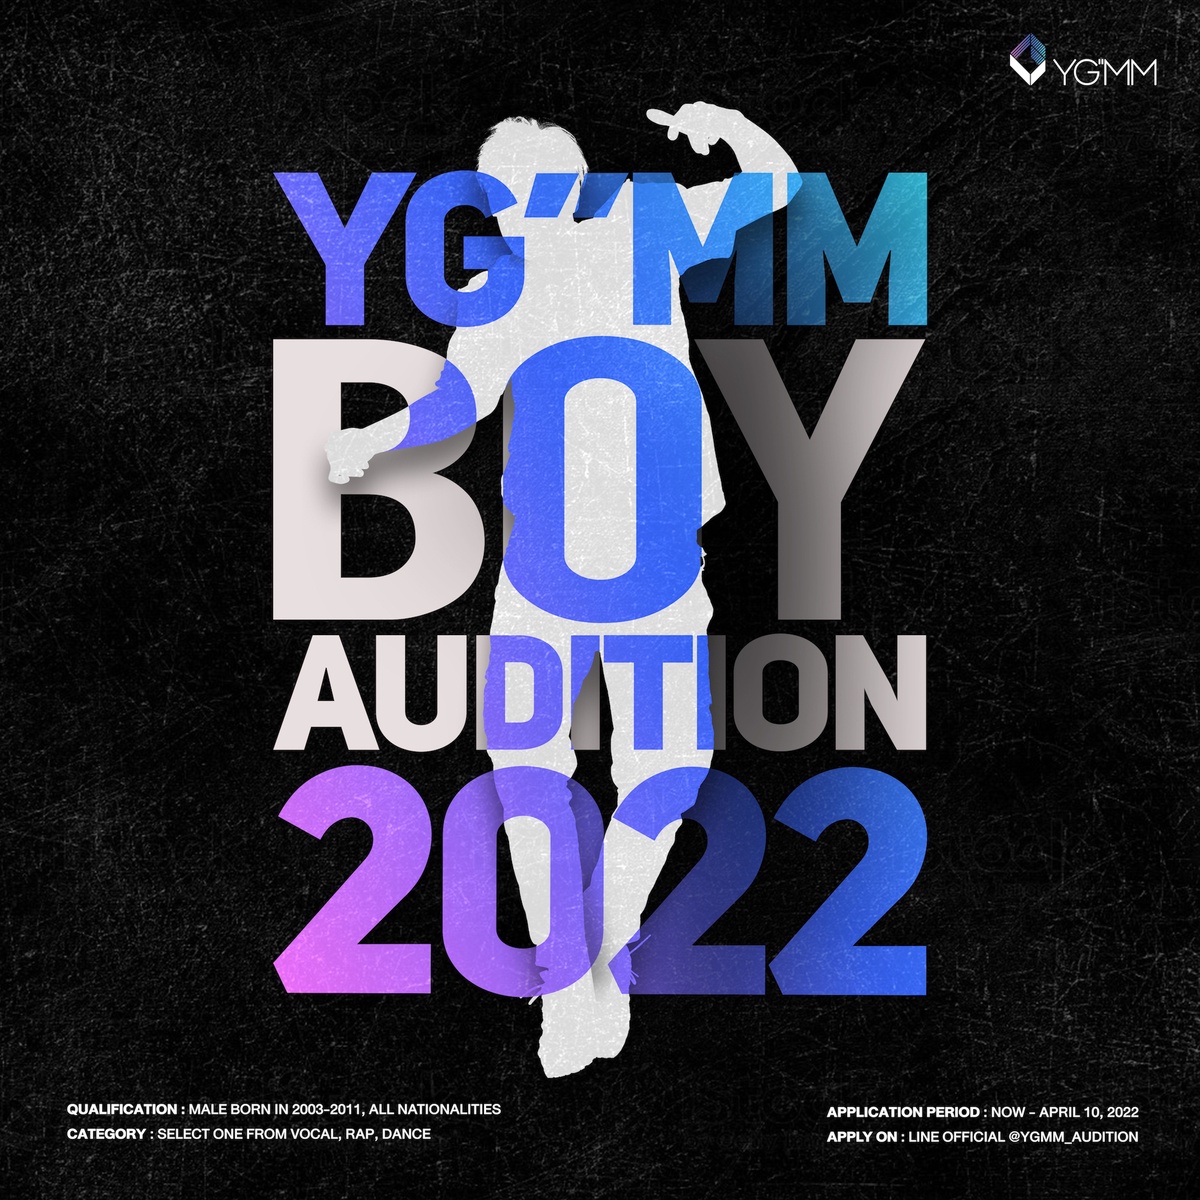 YG''MM เปิดโปรเจกต์ใหญ่ YGMM Boy Audition 2022 ค้นหา Boy Trainee ทั่วโลกร่วมเป็นศิลปินฝึกหัด